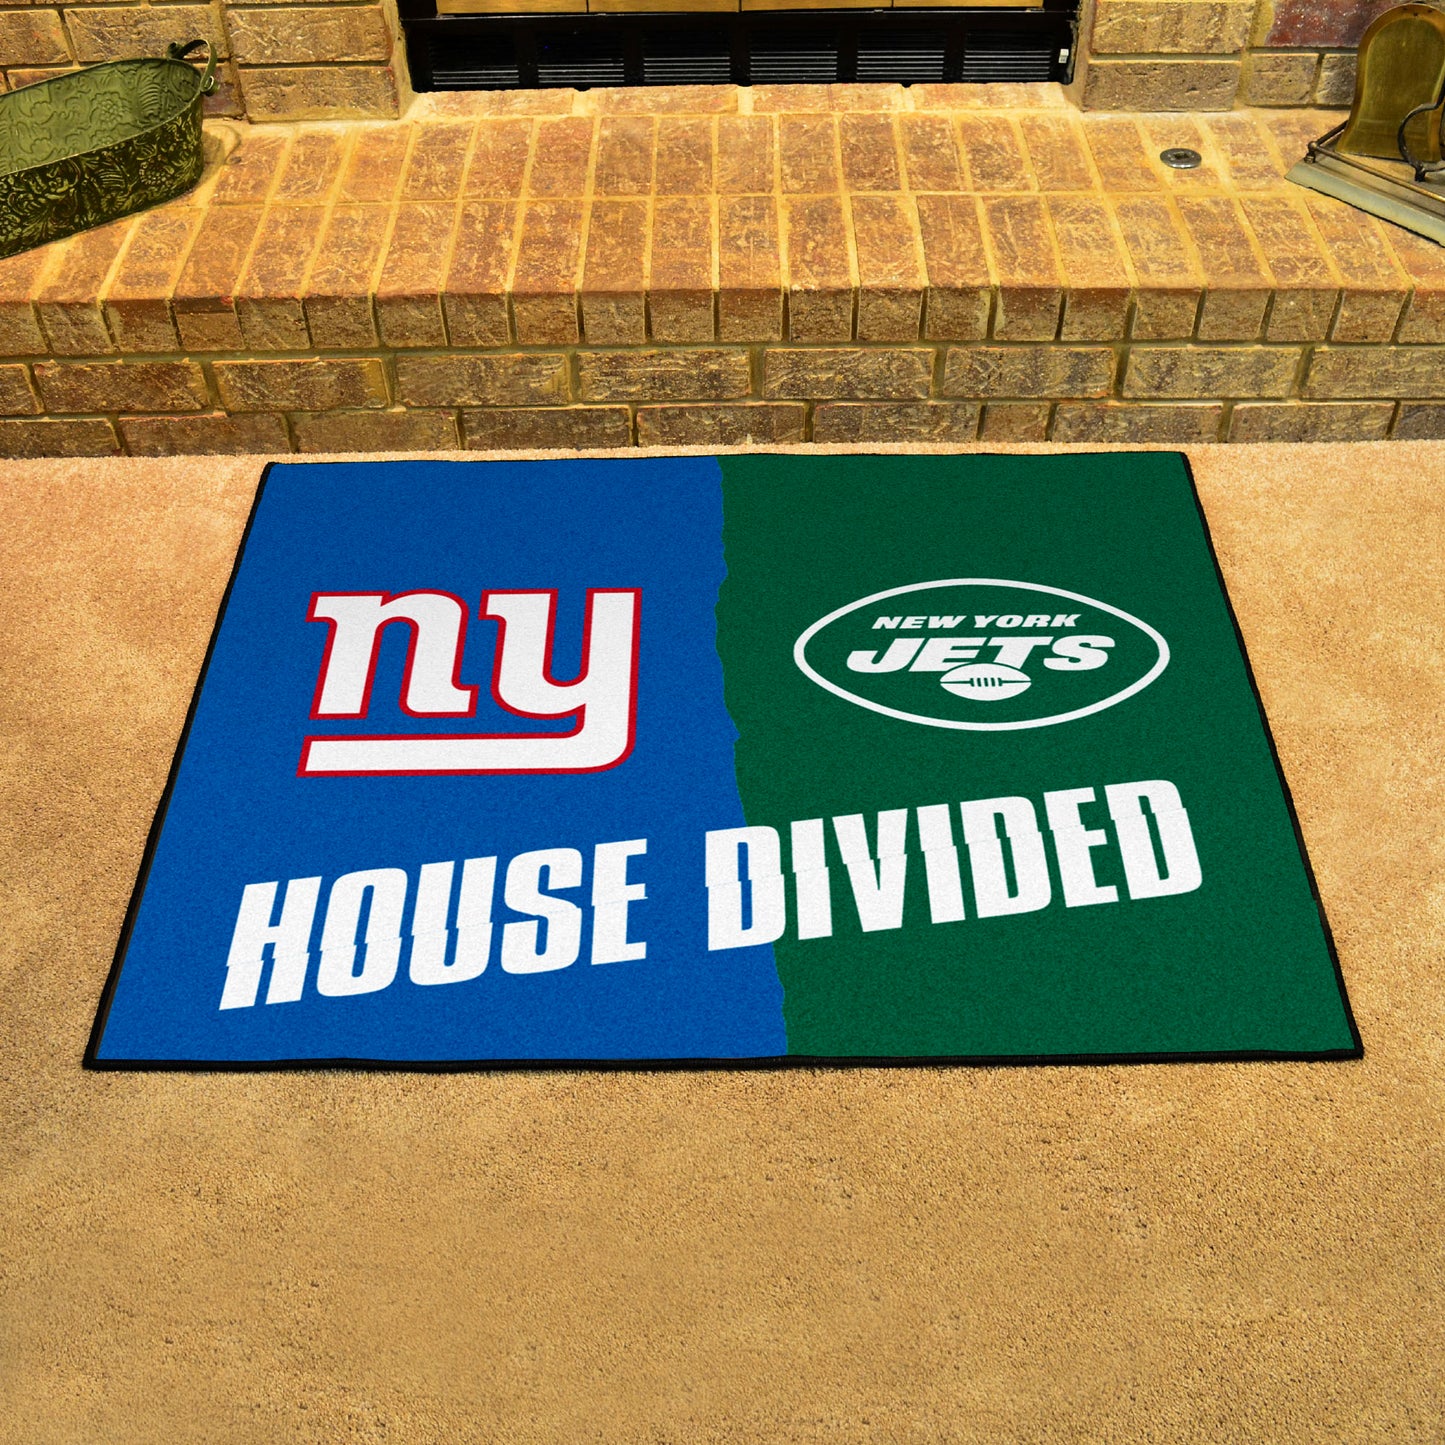 NFL Giants / Jets House Divided Rug